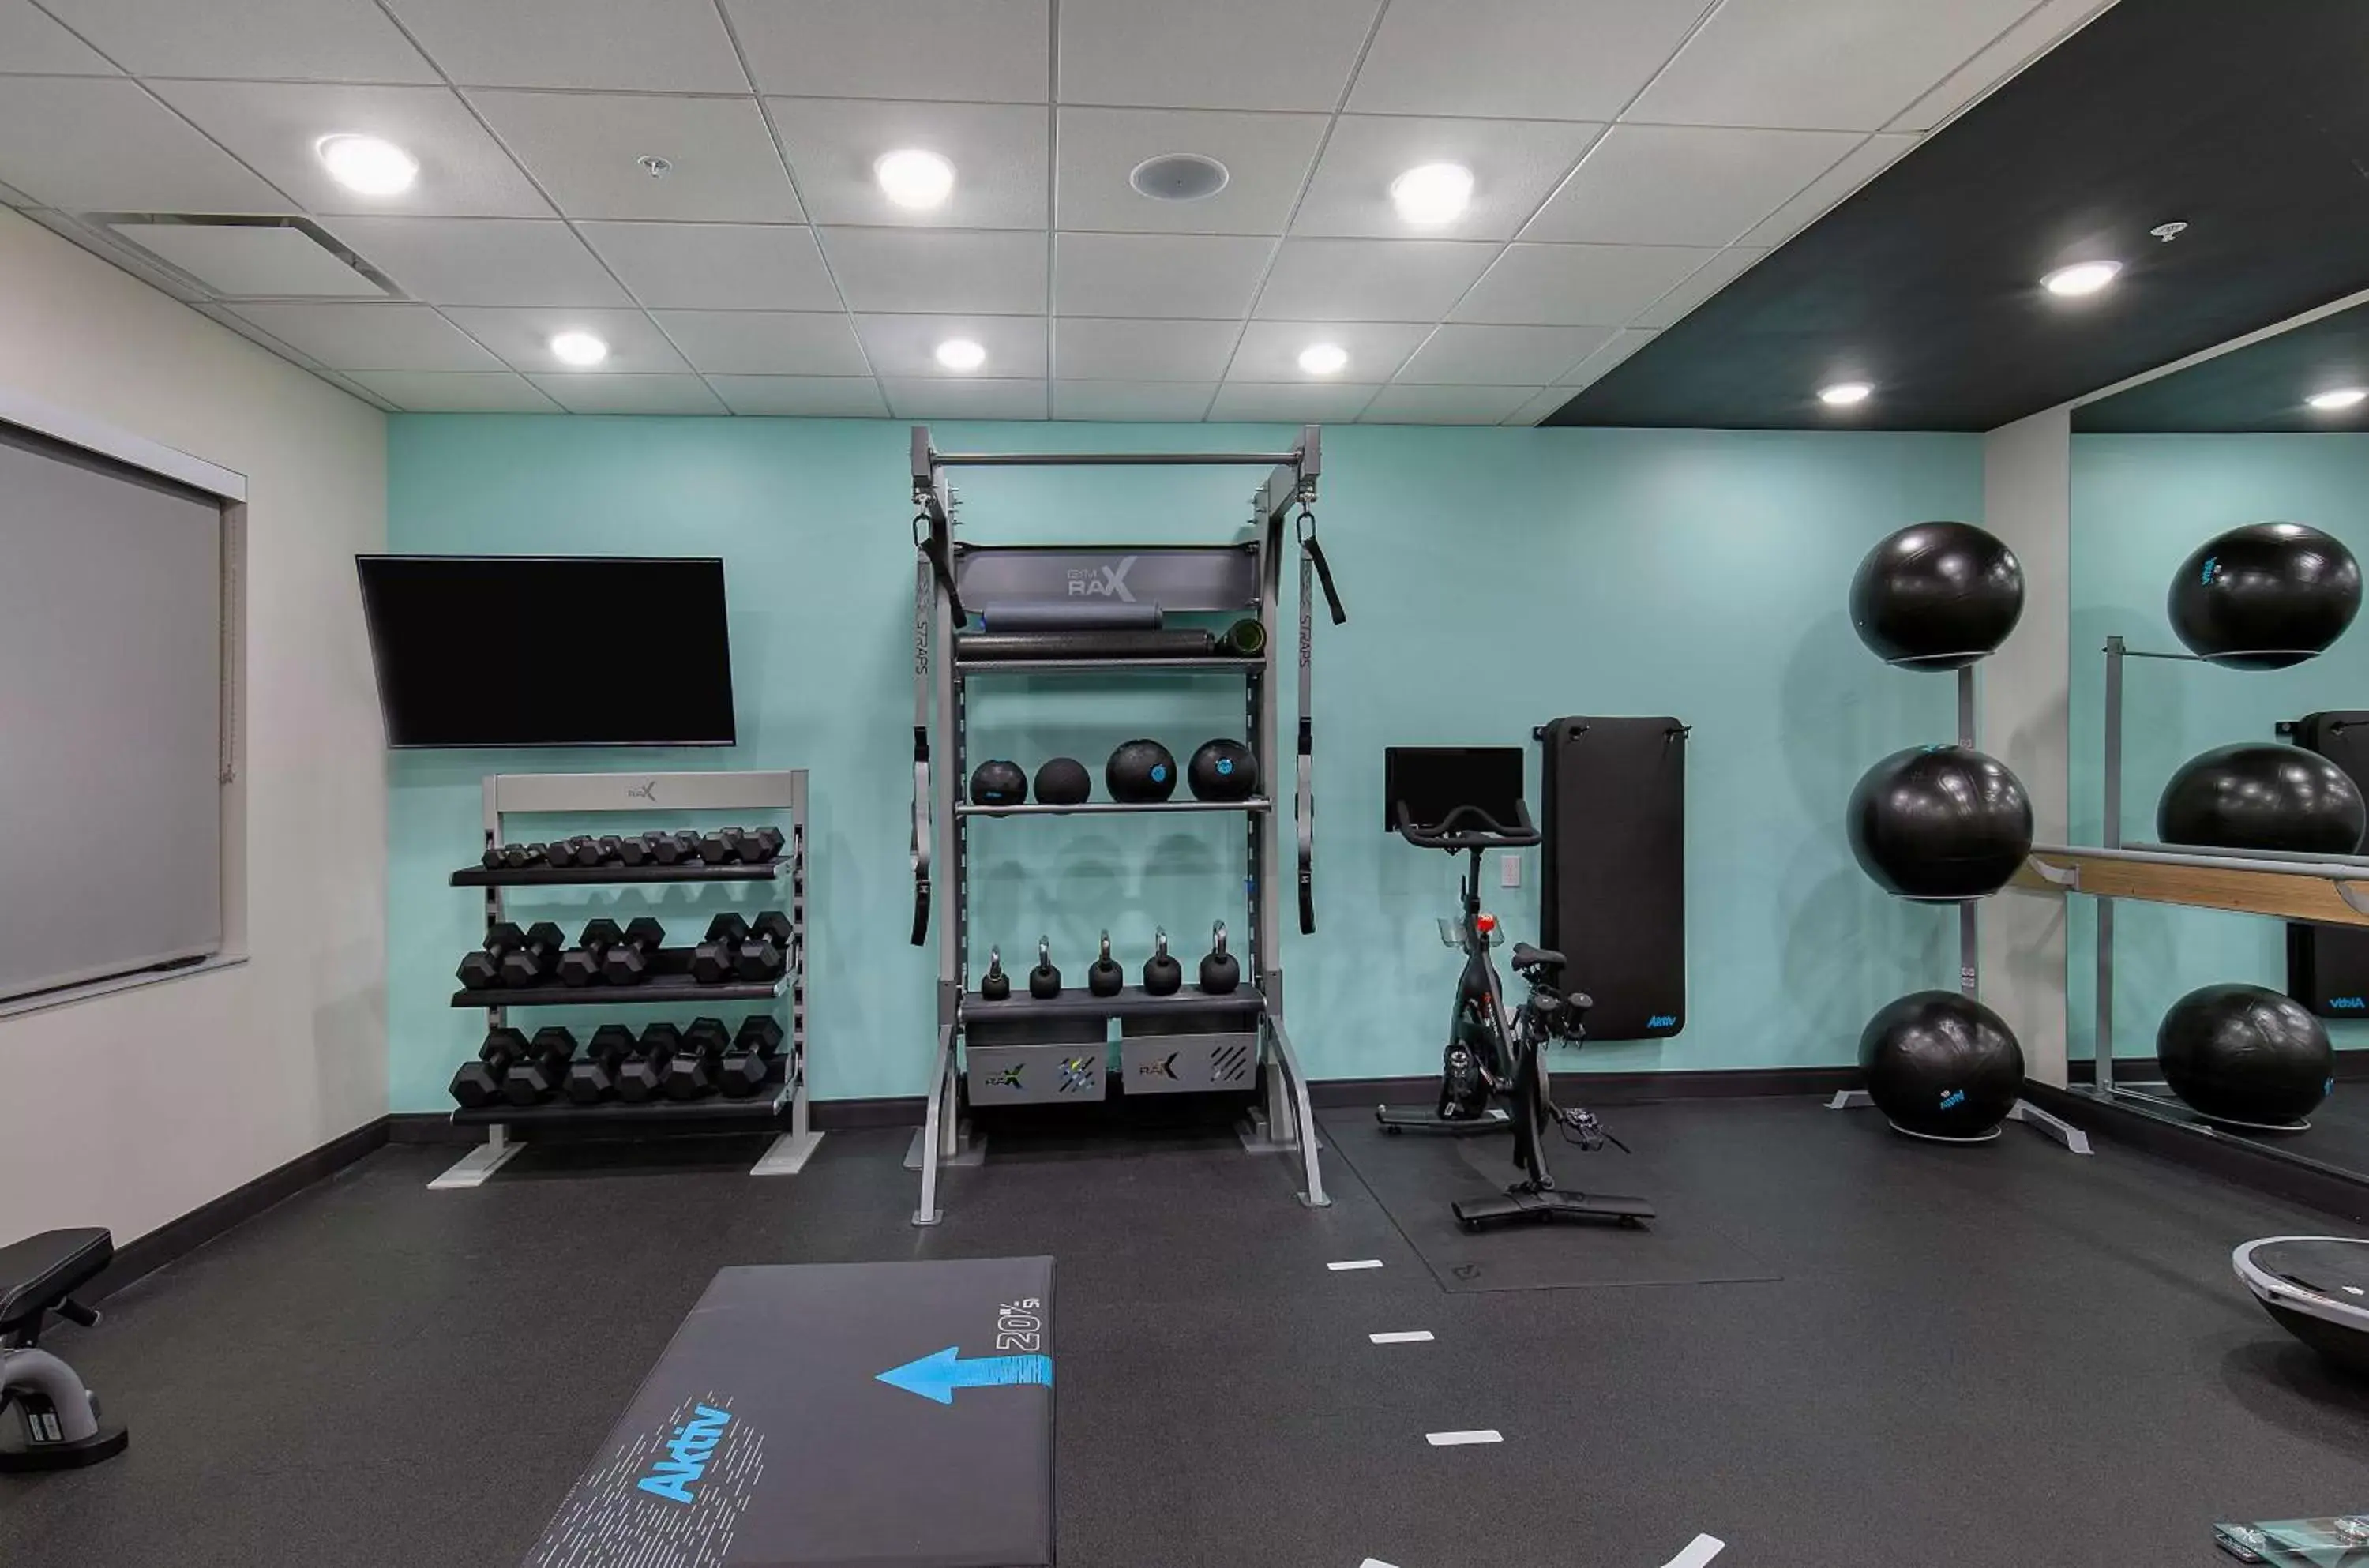 Fitness centre/facilities, Fitness Center/Facilities in Tru By Hilton Lexington University Medical Center, Ky